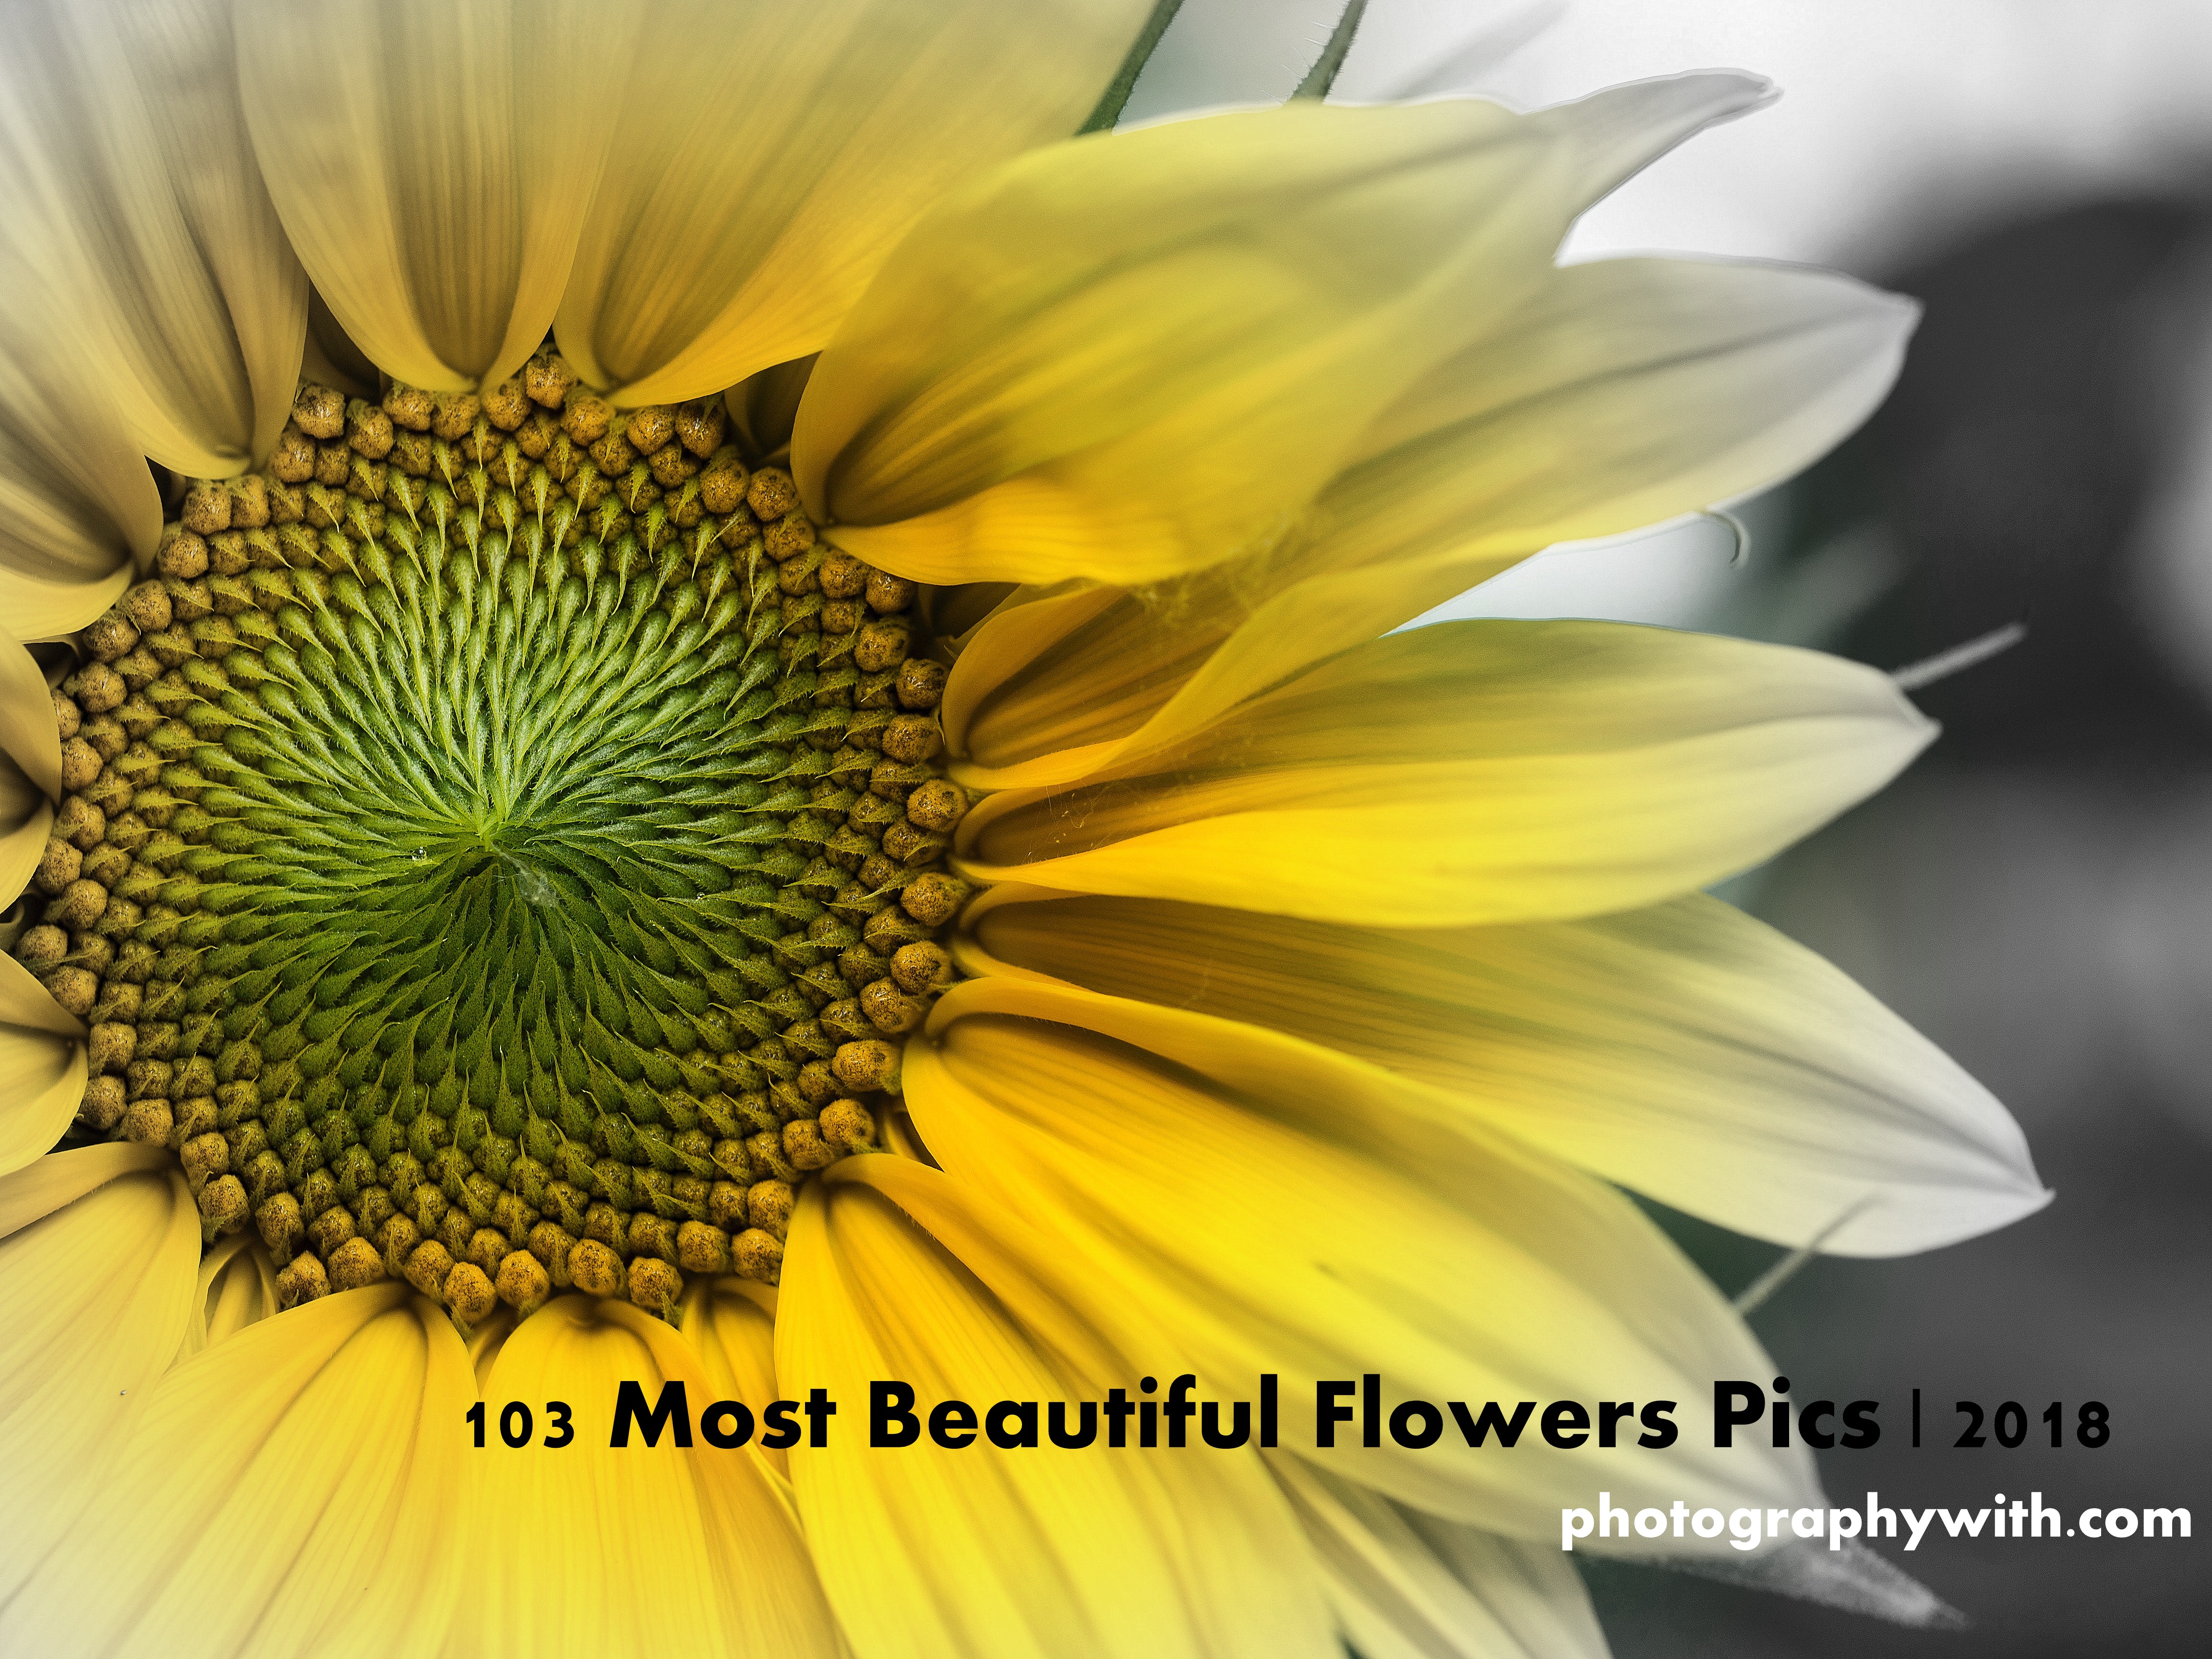 103 Most Beautiful Flowers Pics | 2018